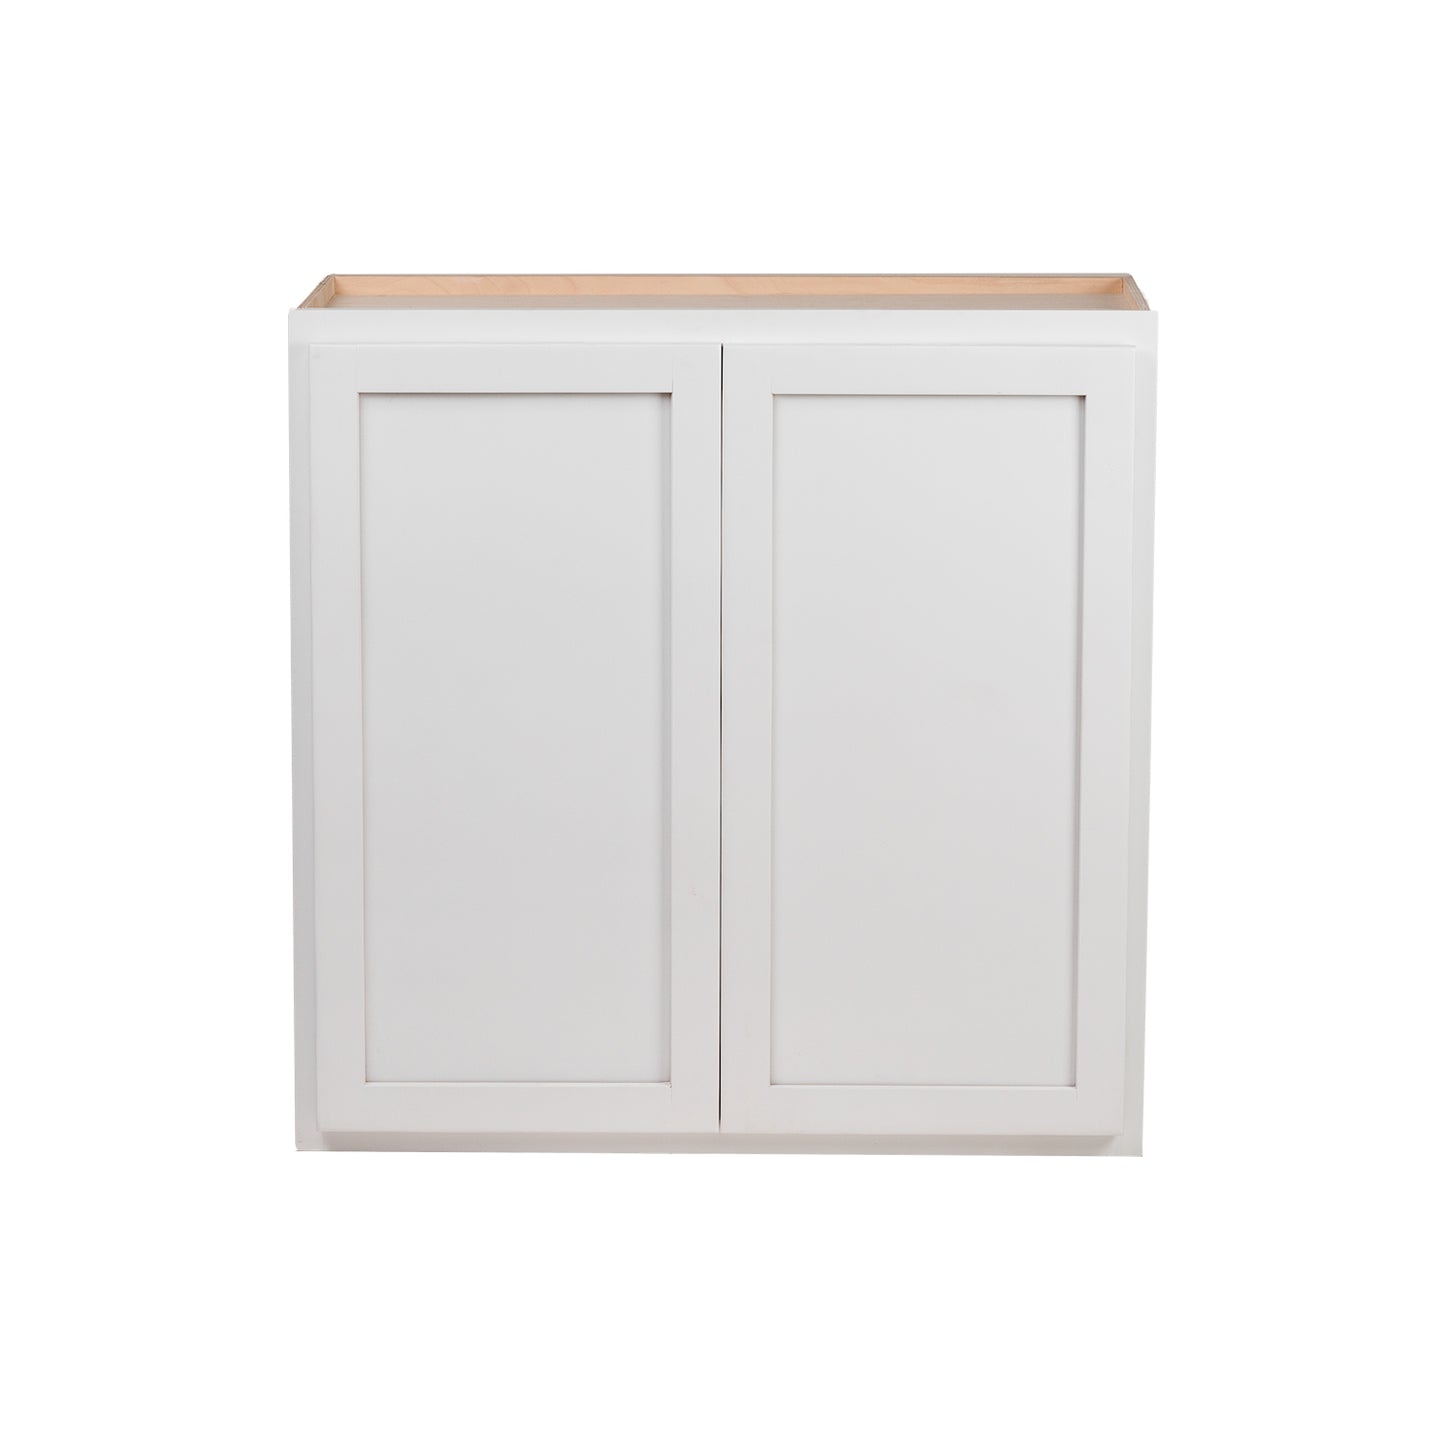 Quicklock RTA (Ready-to-Assemble) Pure White 30"Wx36"Hx12"D Wall Cabinet